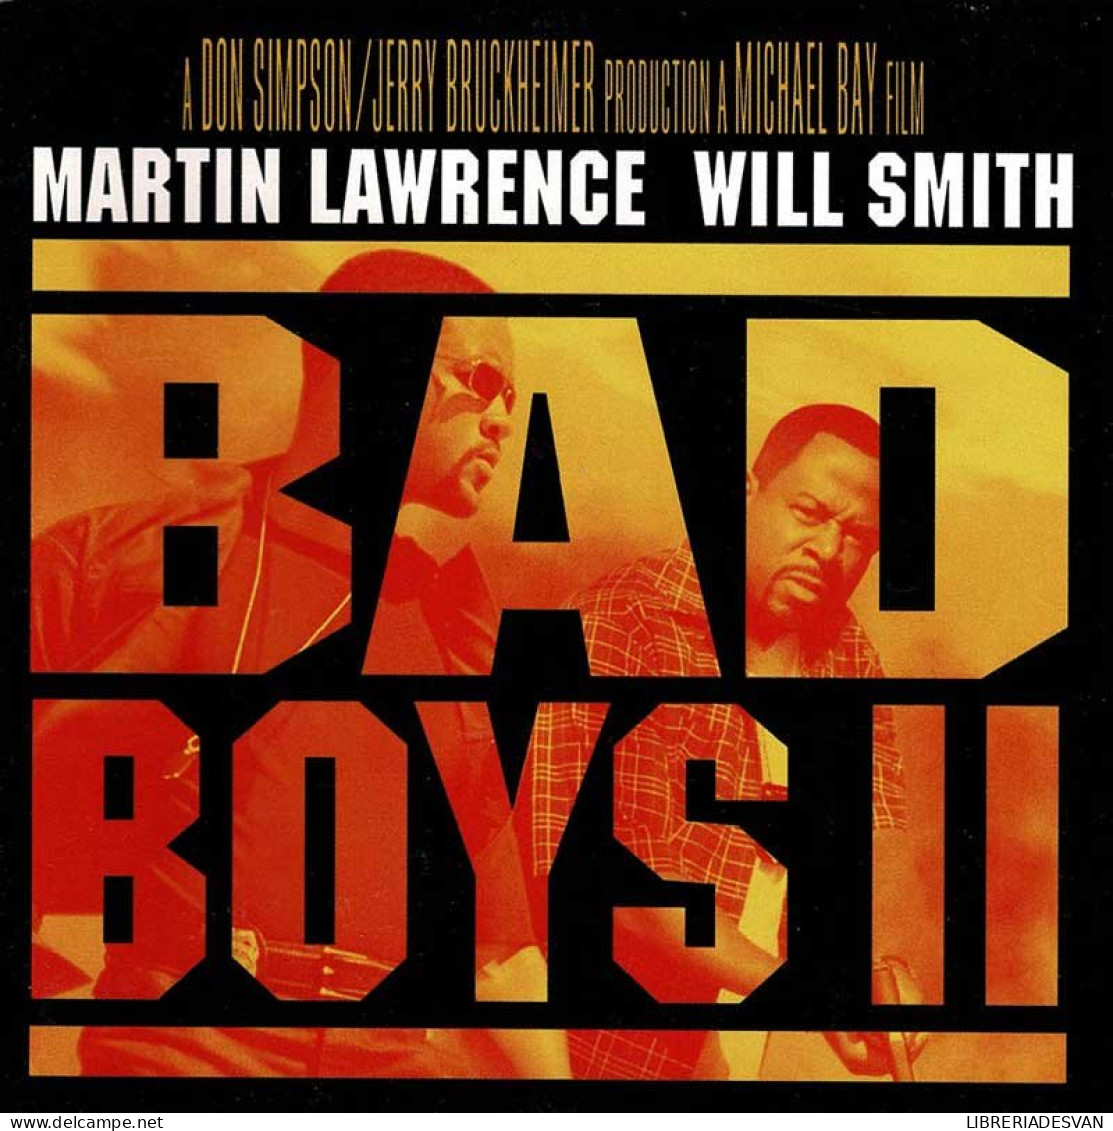 Bad Boys II - The Soundtrack. CD - Musique De Films